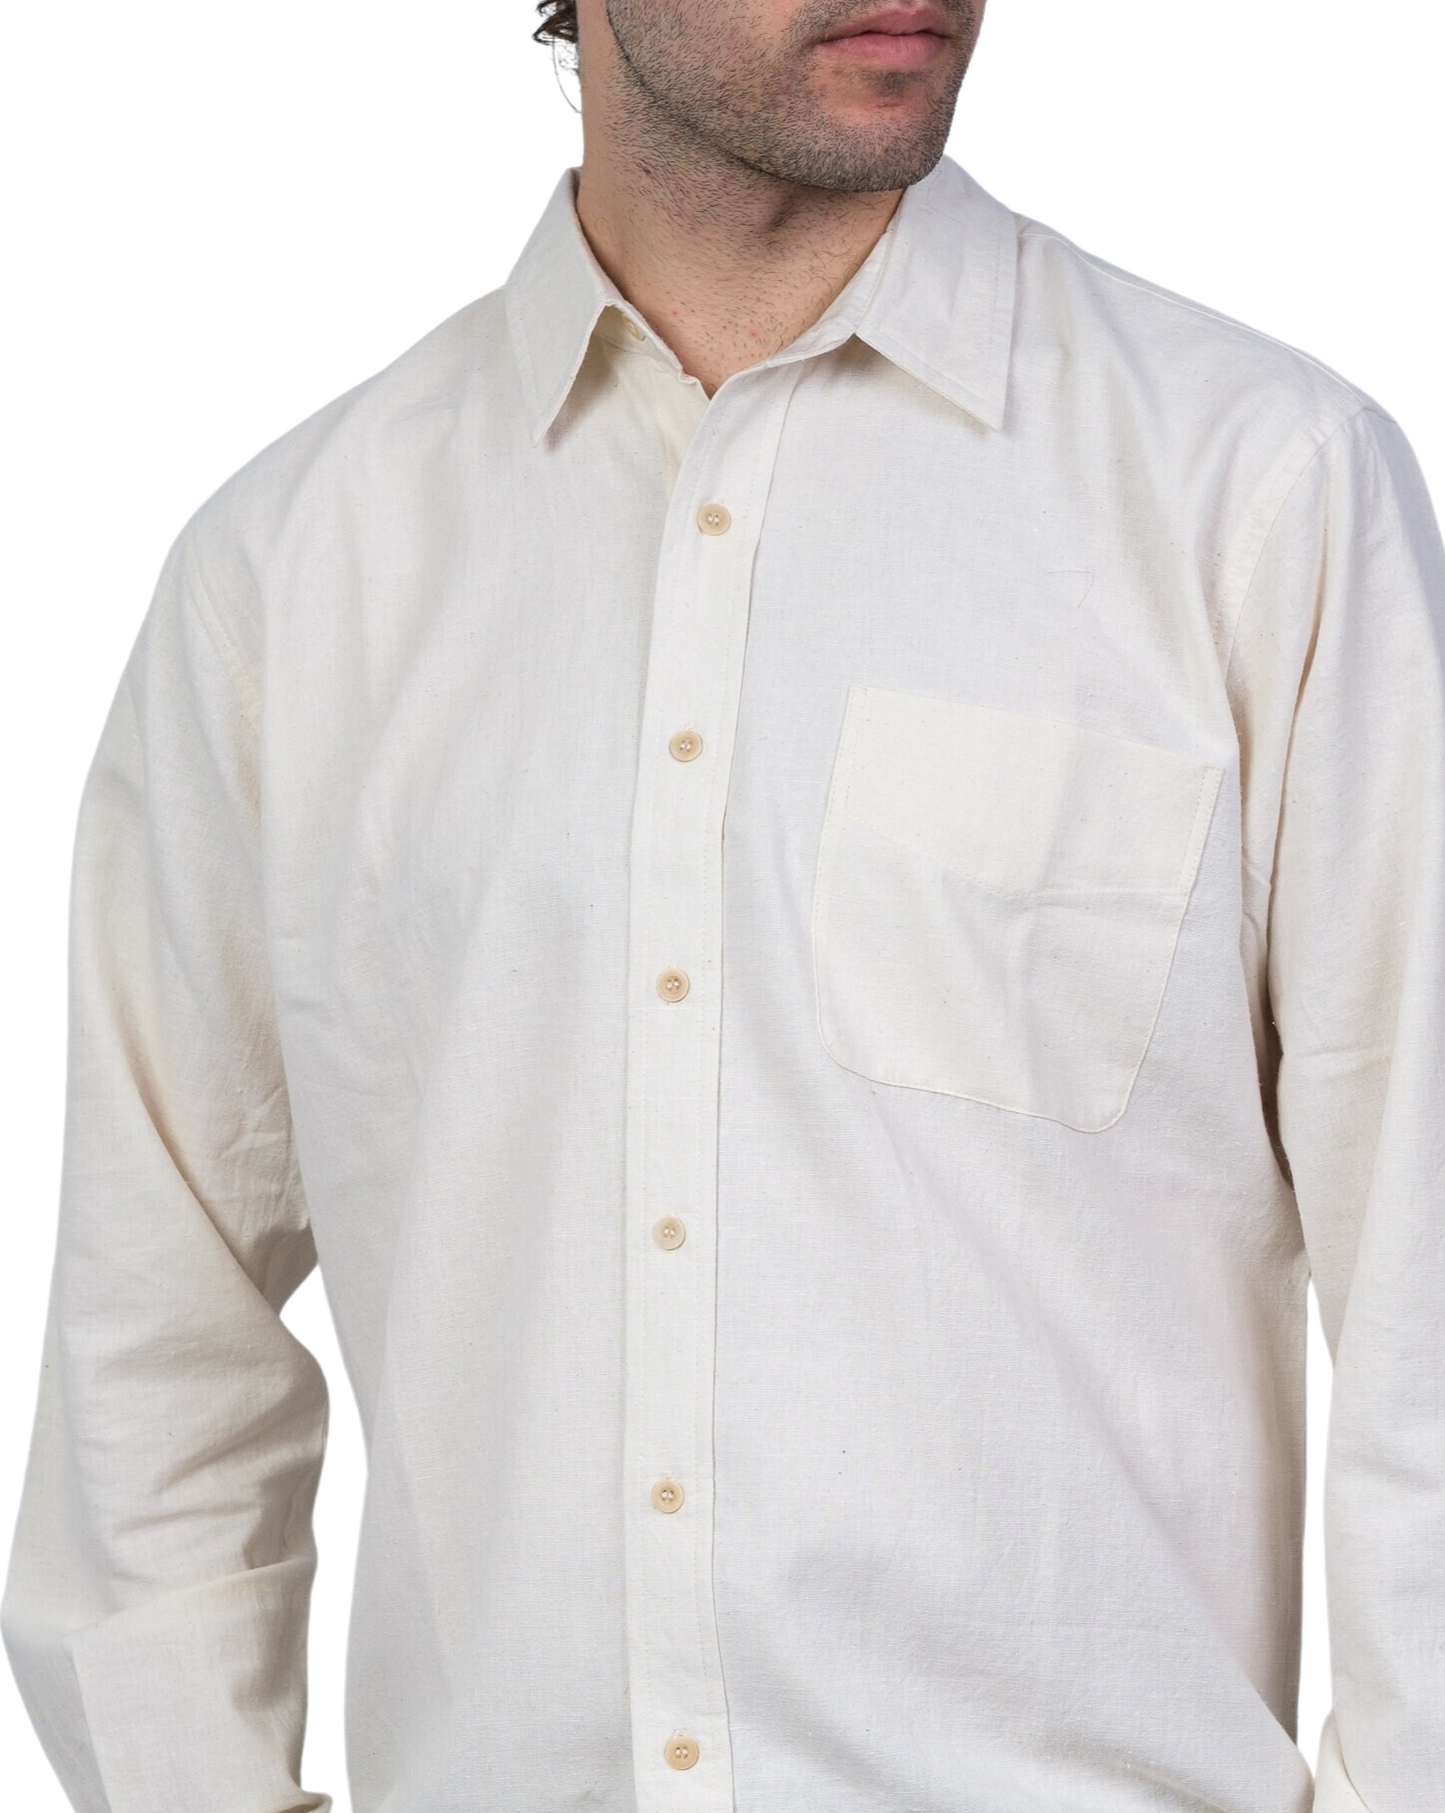 Hemp and Organic Cotton Oxford Shirt